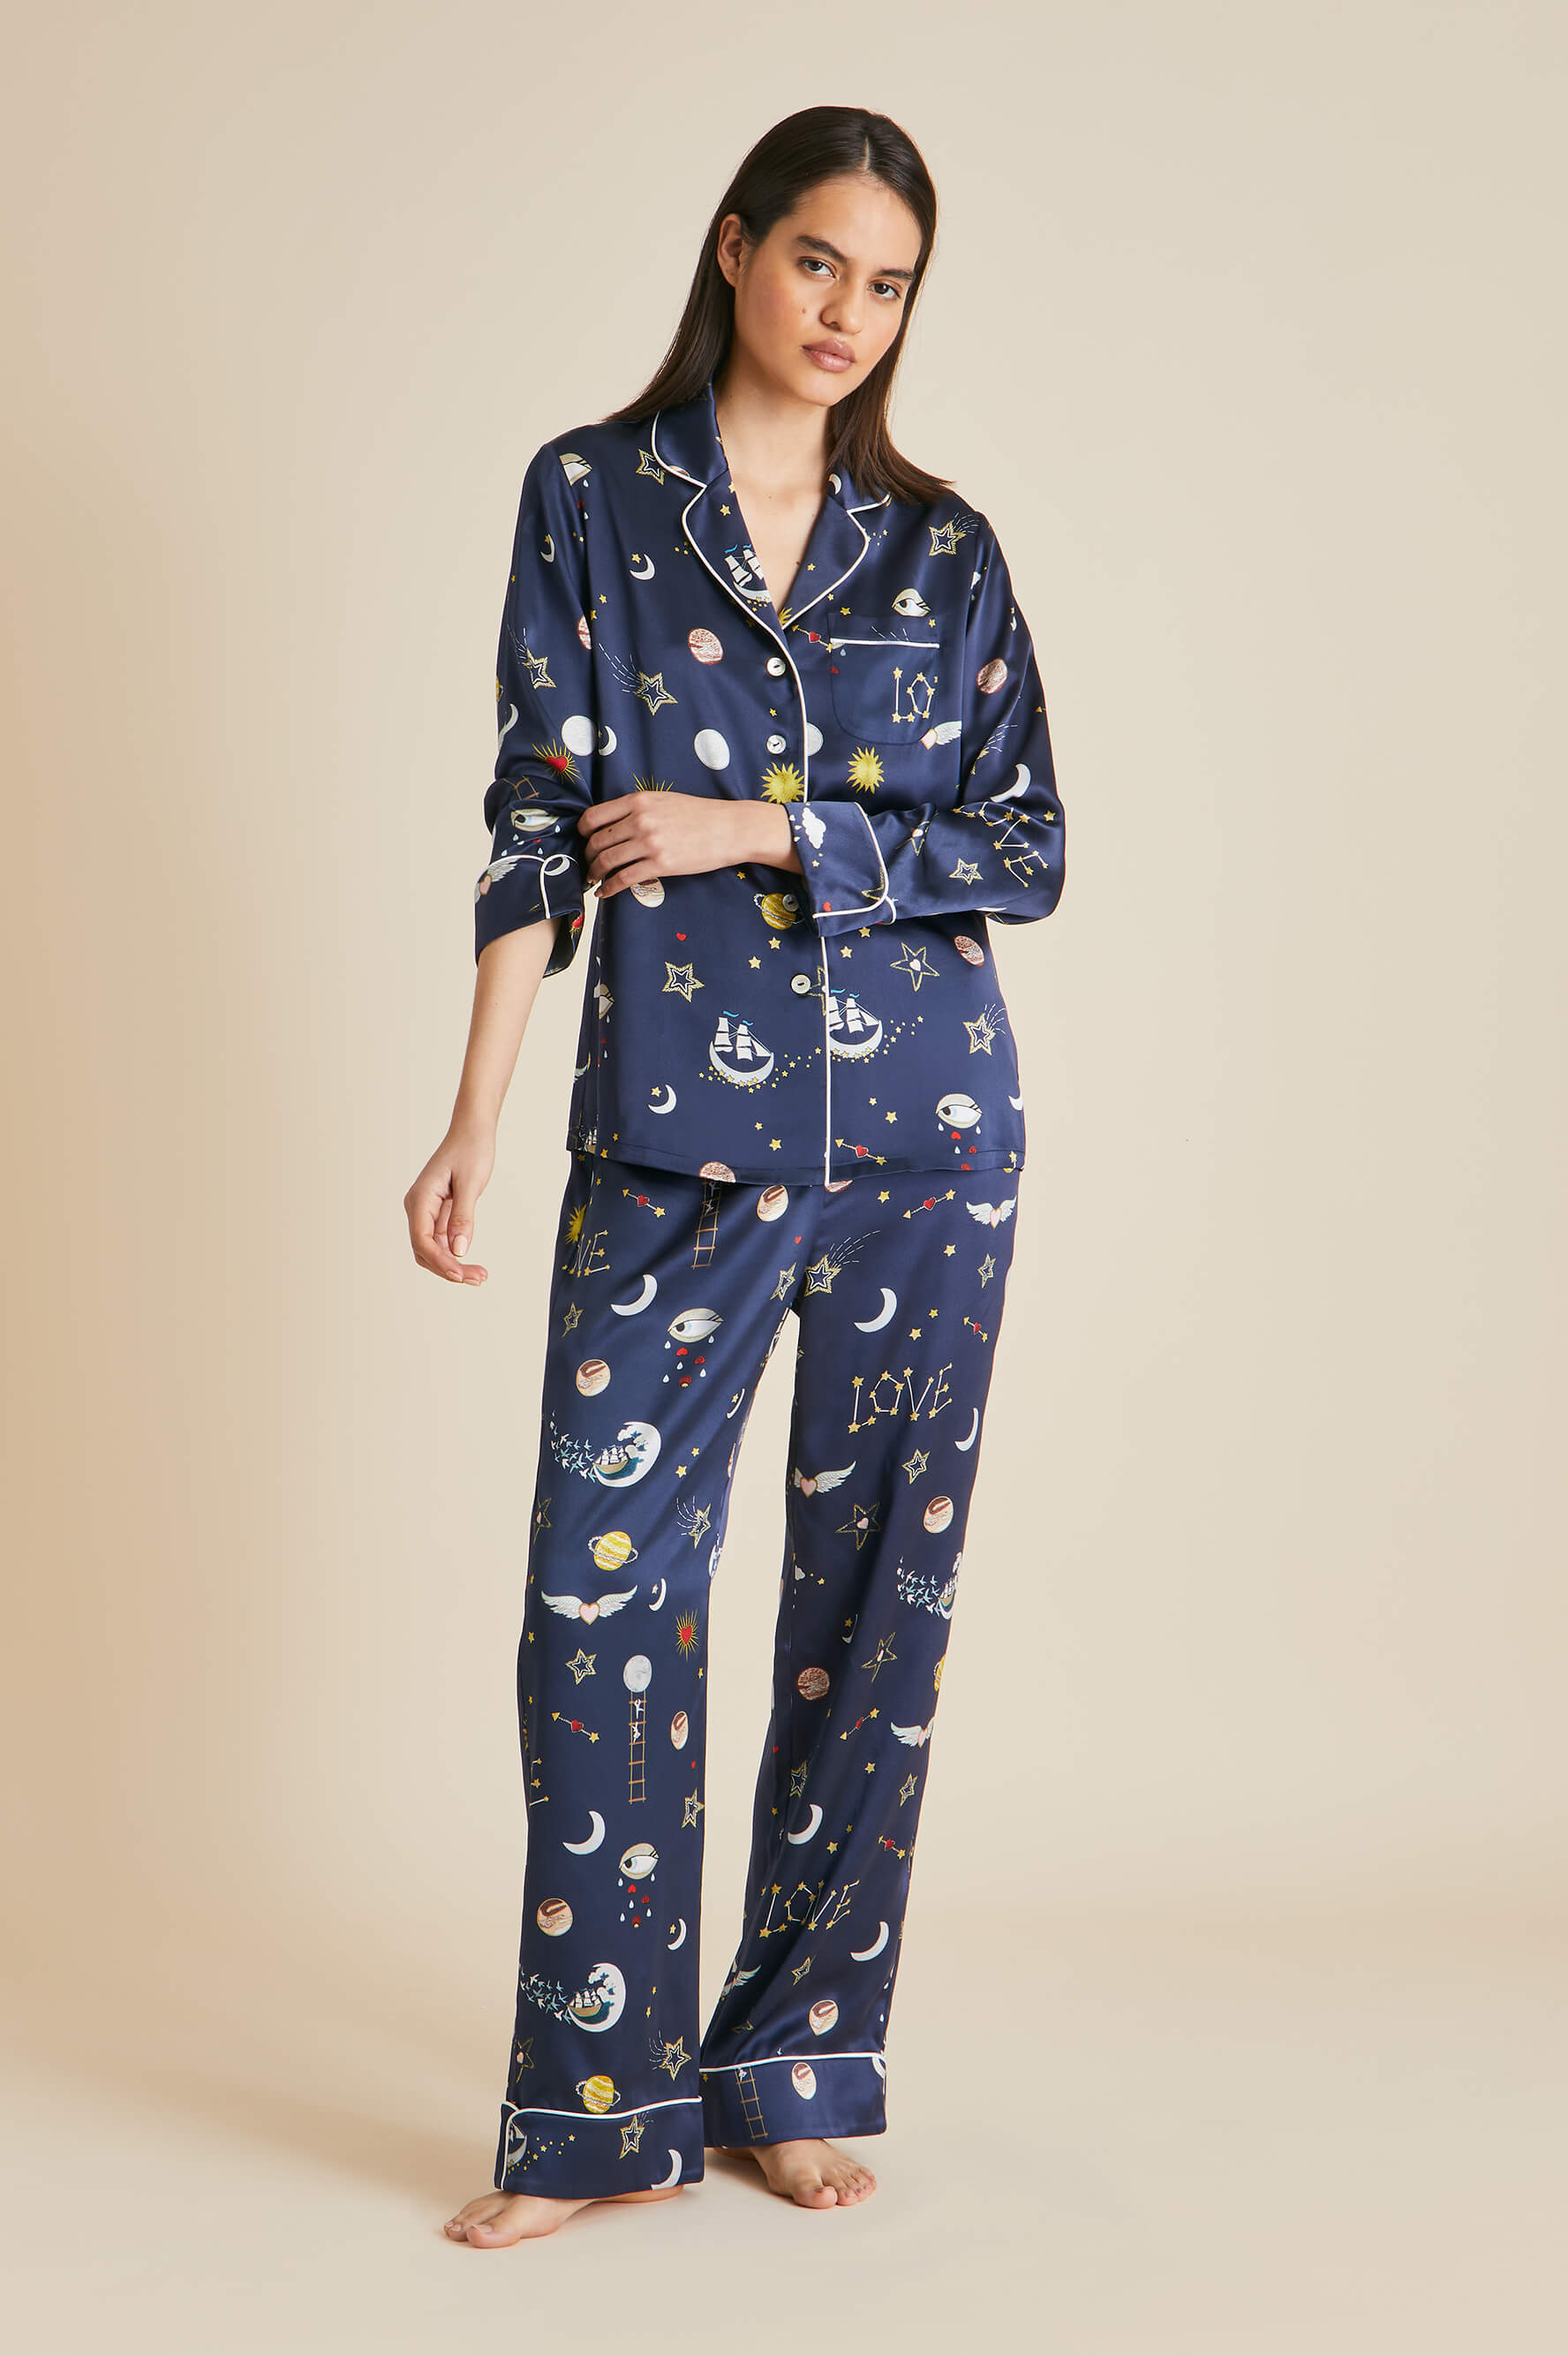 Lila Cosmic Navy pajamas in Silk Satin